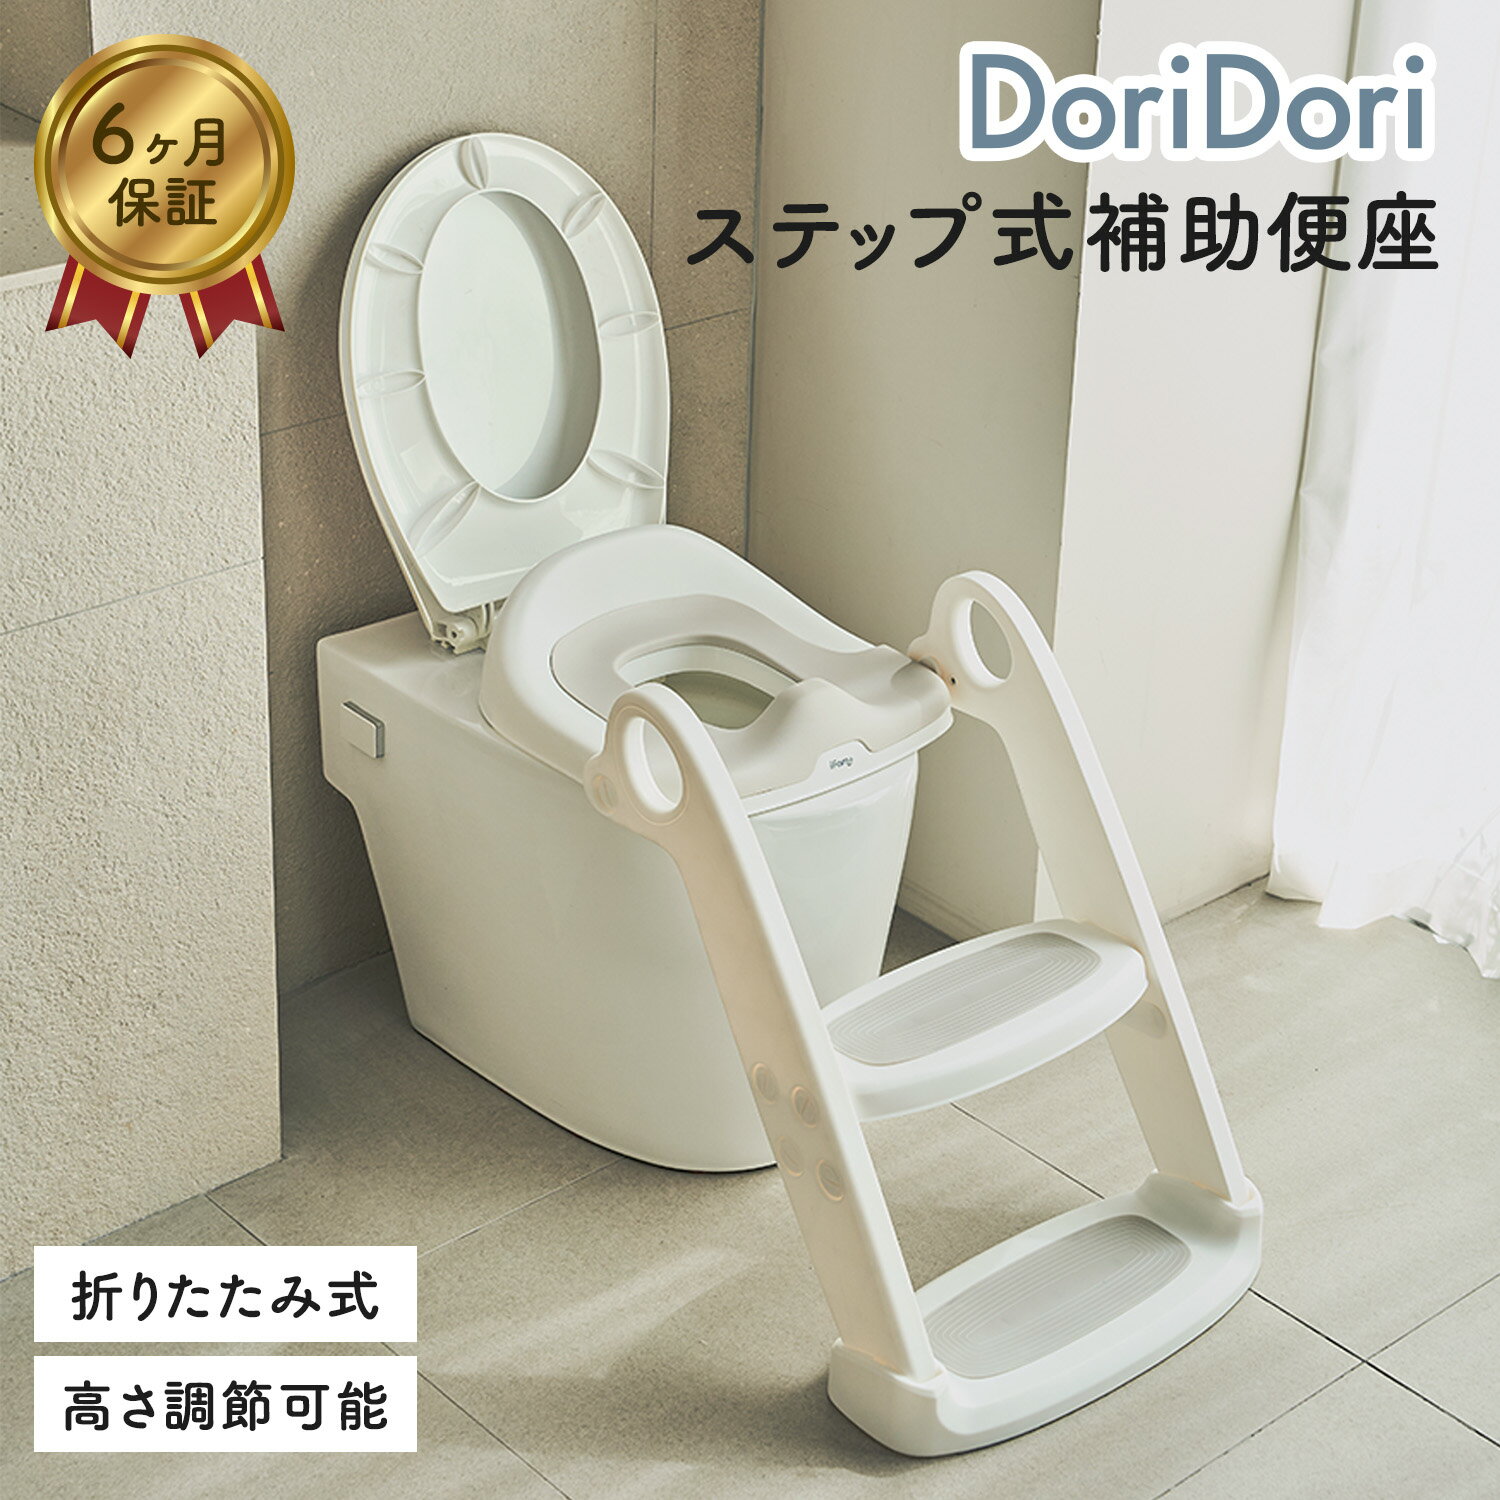 (doridori) トイレトレーニング 便座 踏み台 折りたたみ 手すり付き 補助便座 トイトレ 練習 高さ 調節 簡単設置 お…